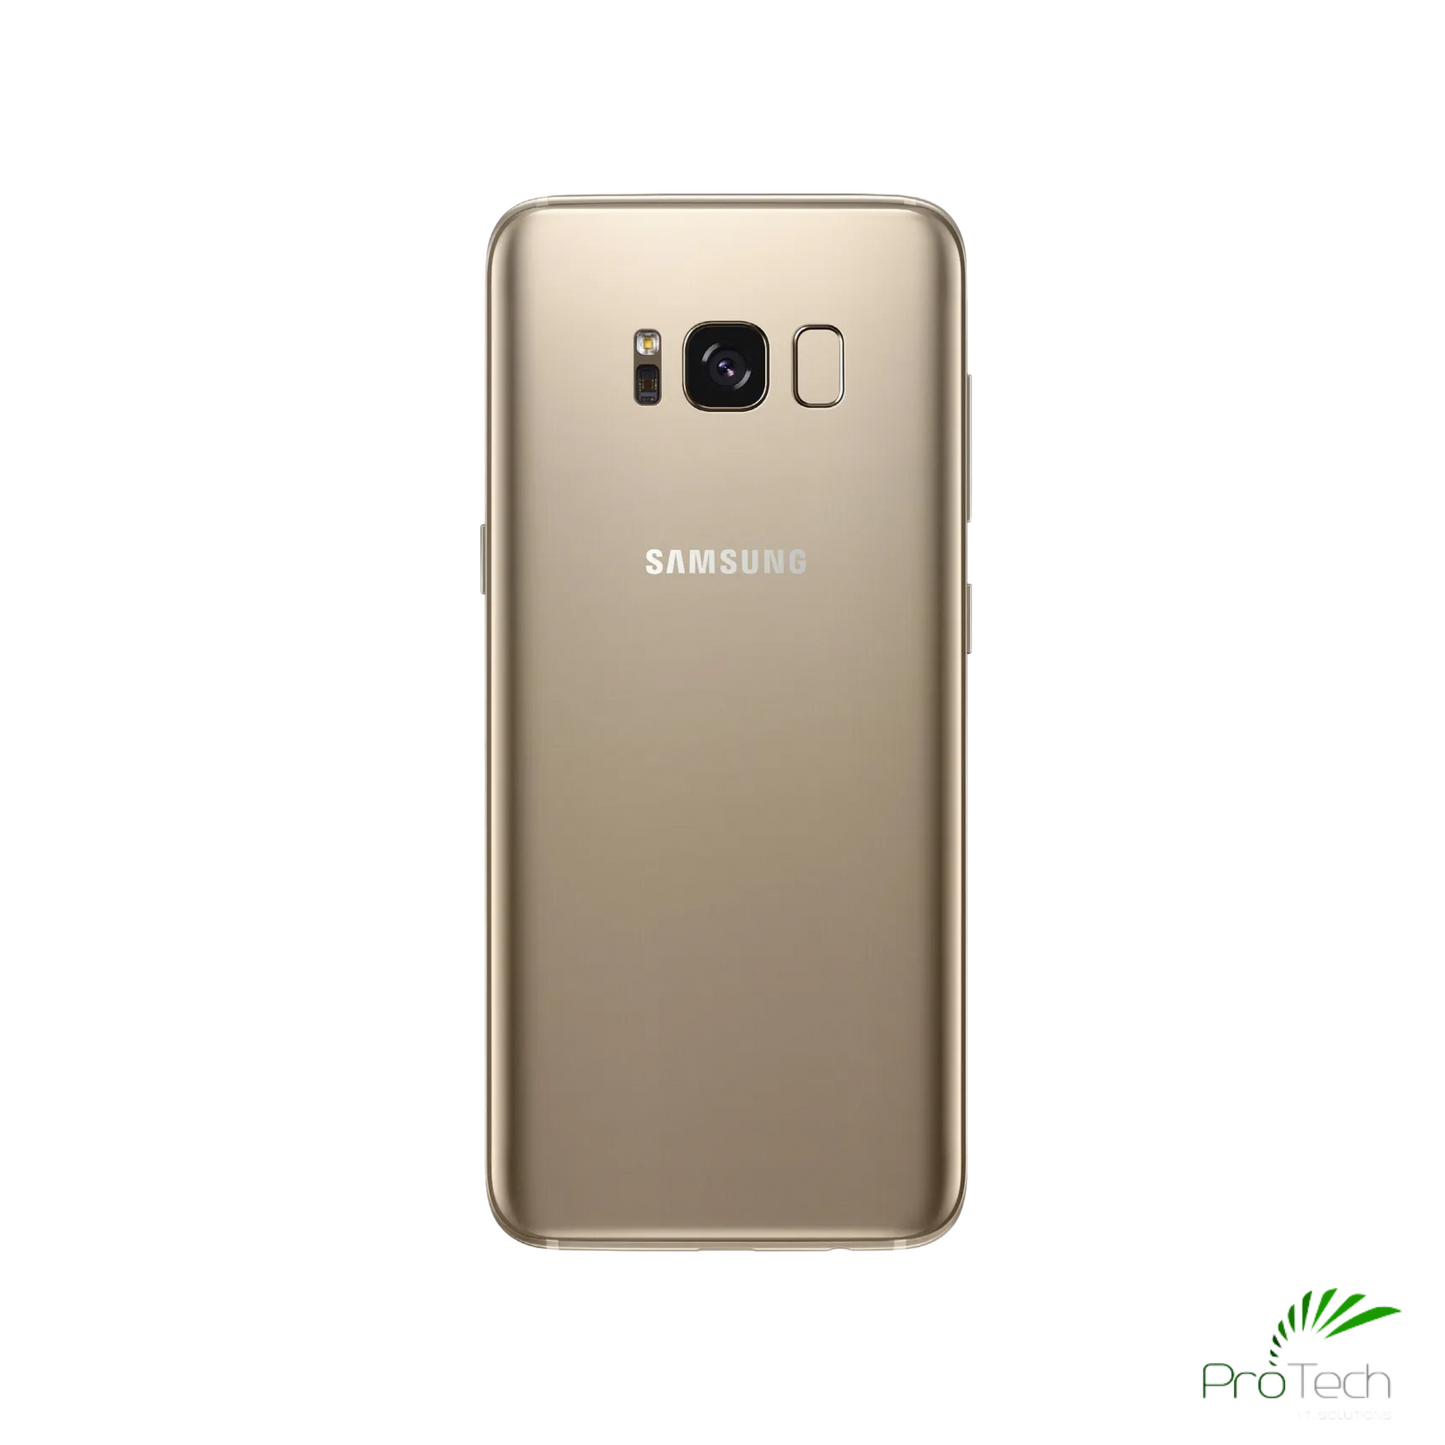 Samsung Galaxy S8 | 32GB + 64GB | Black + Maple Gold